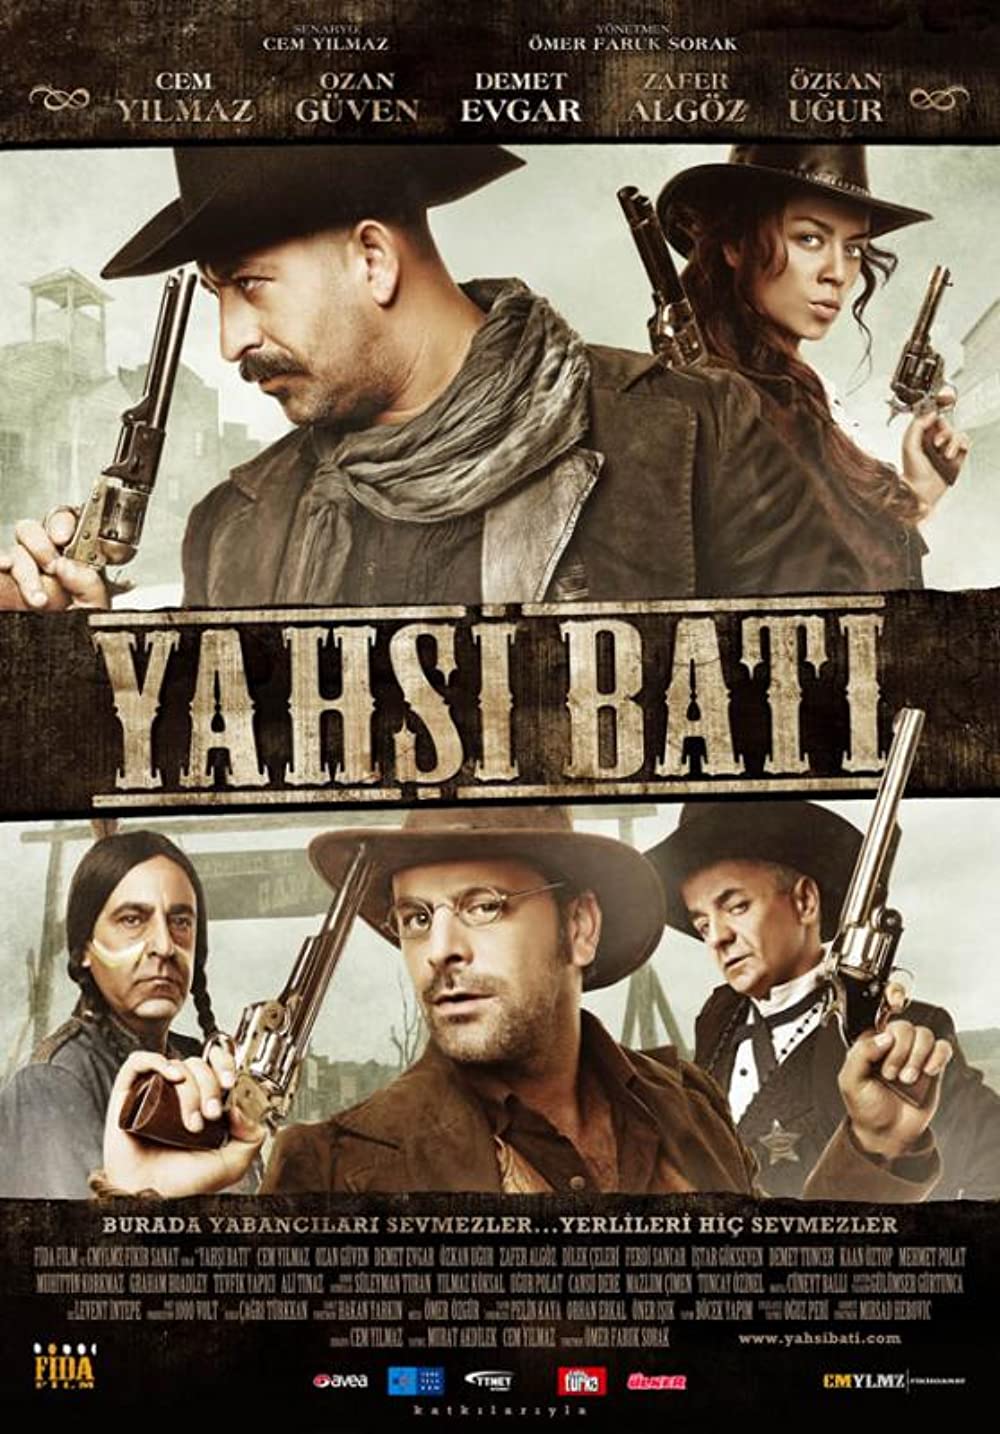 Yahsi bati Movie Download - Yahsi Bati Movie Review